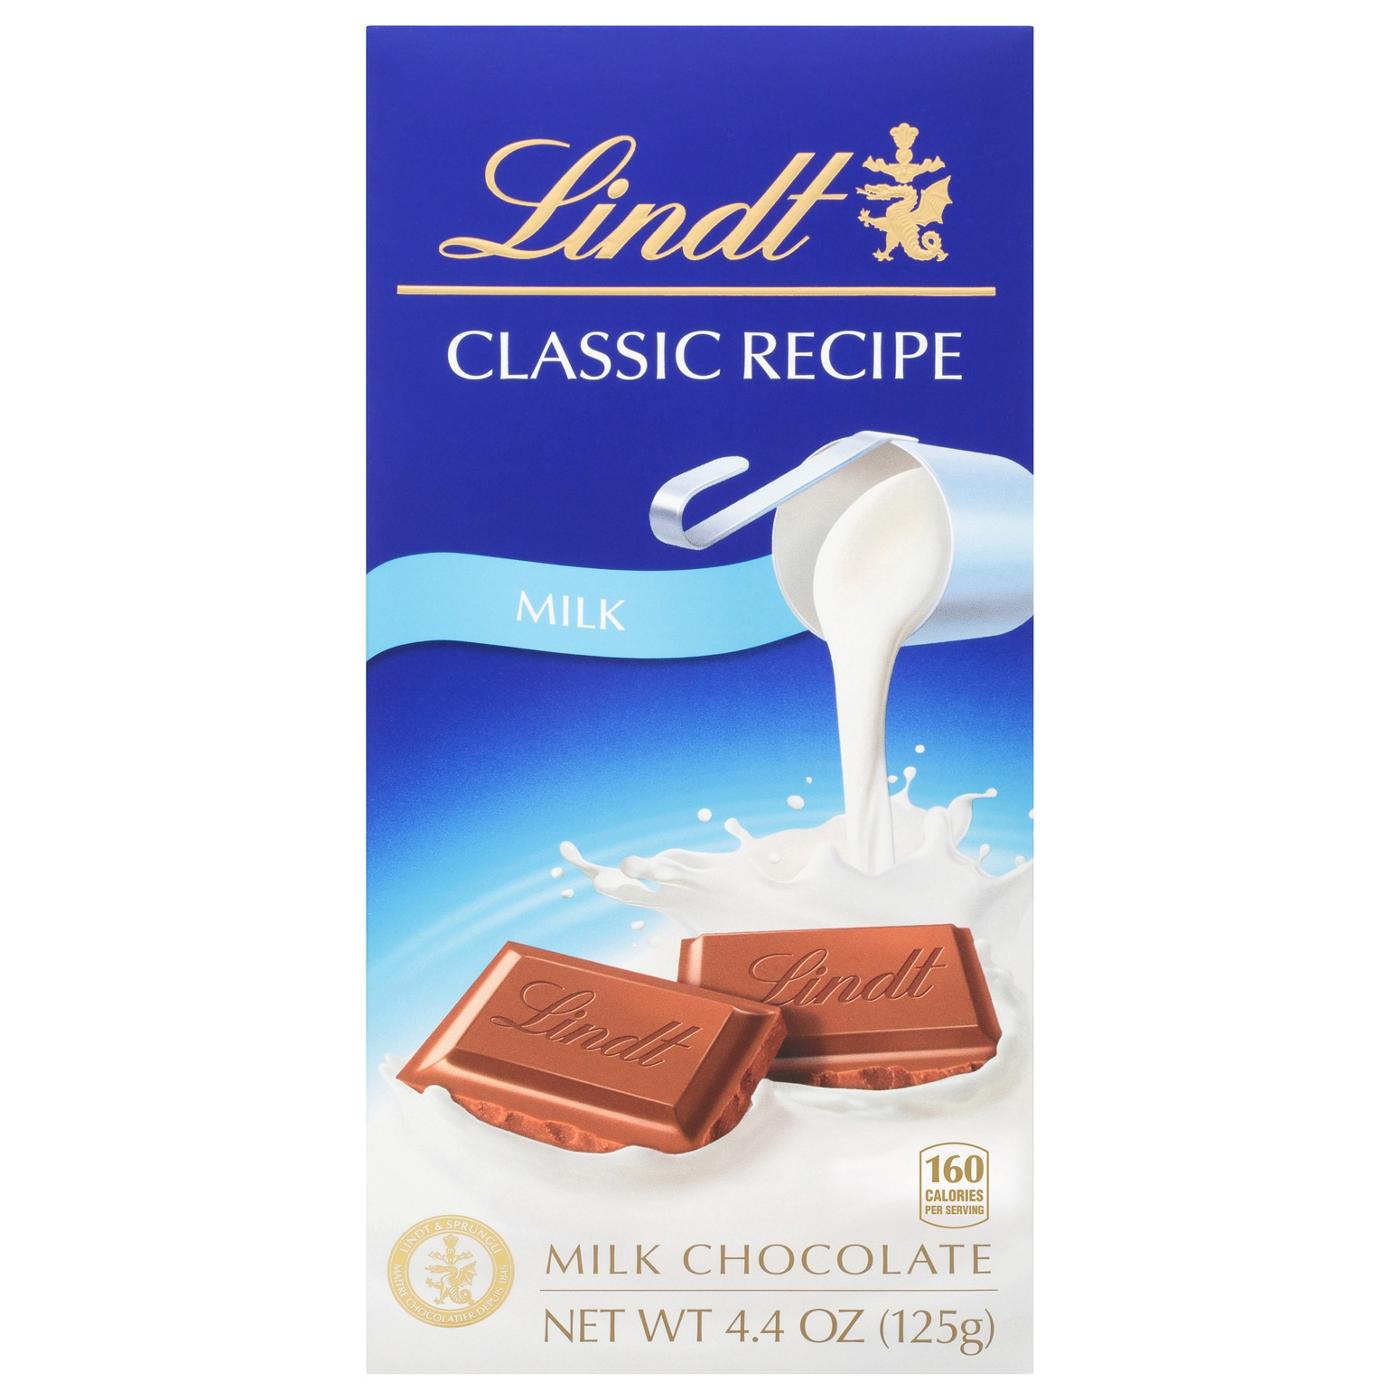 Lindt Classic Recipe Milk Chocolate Bar; image 1 of 2